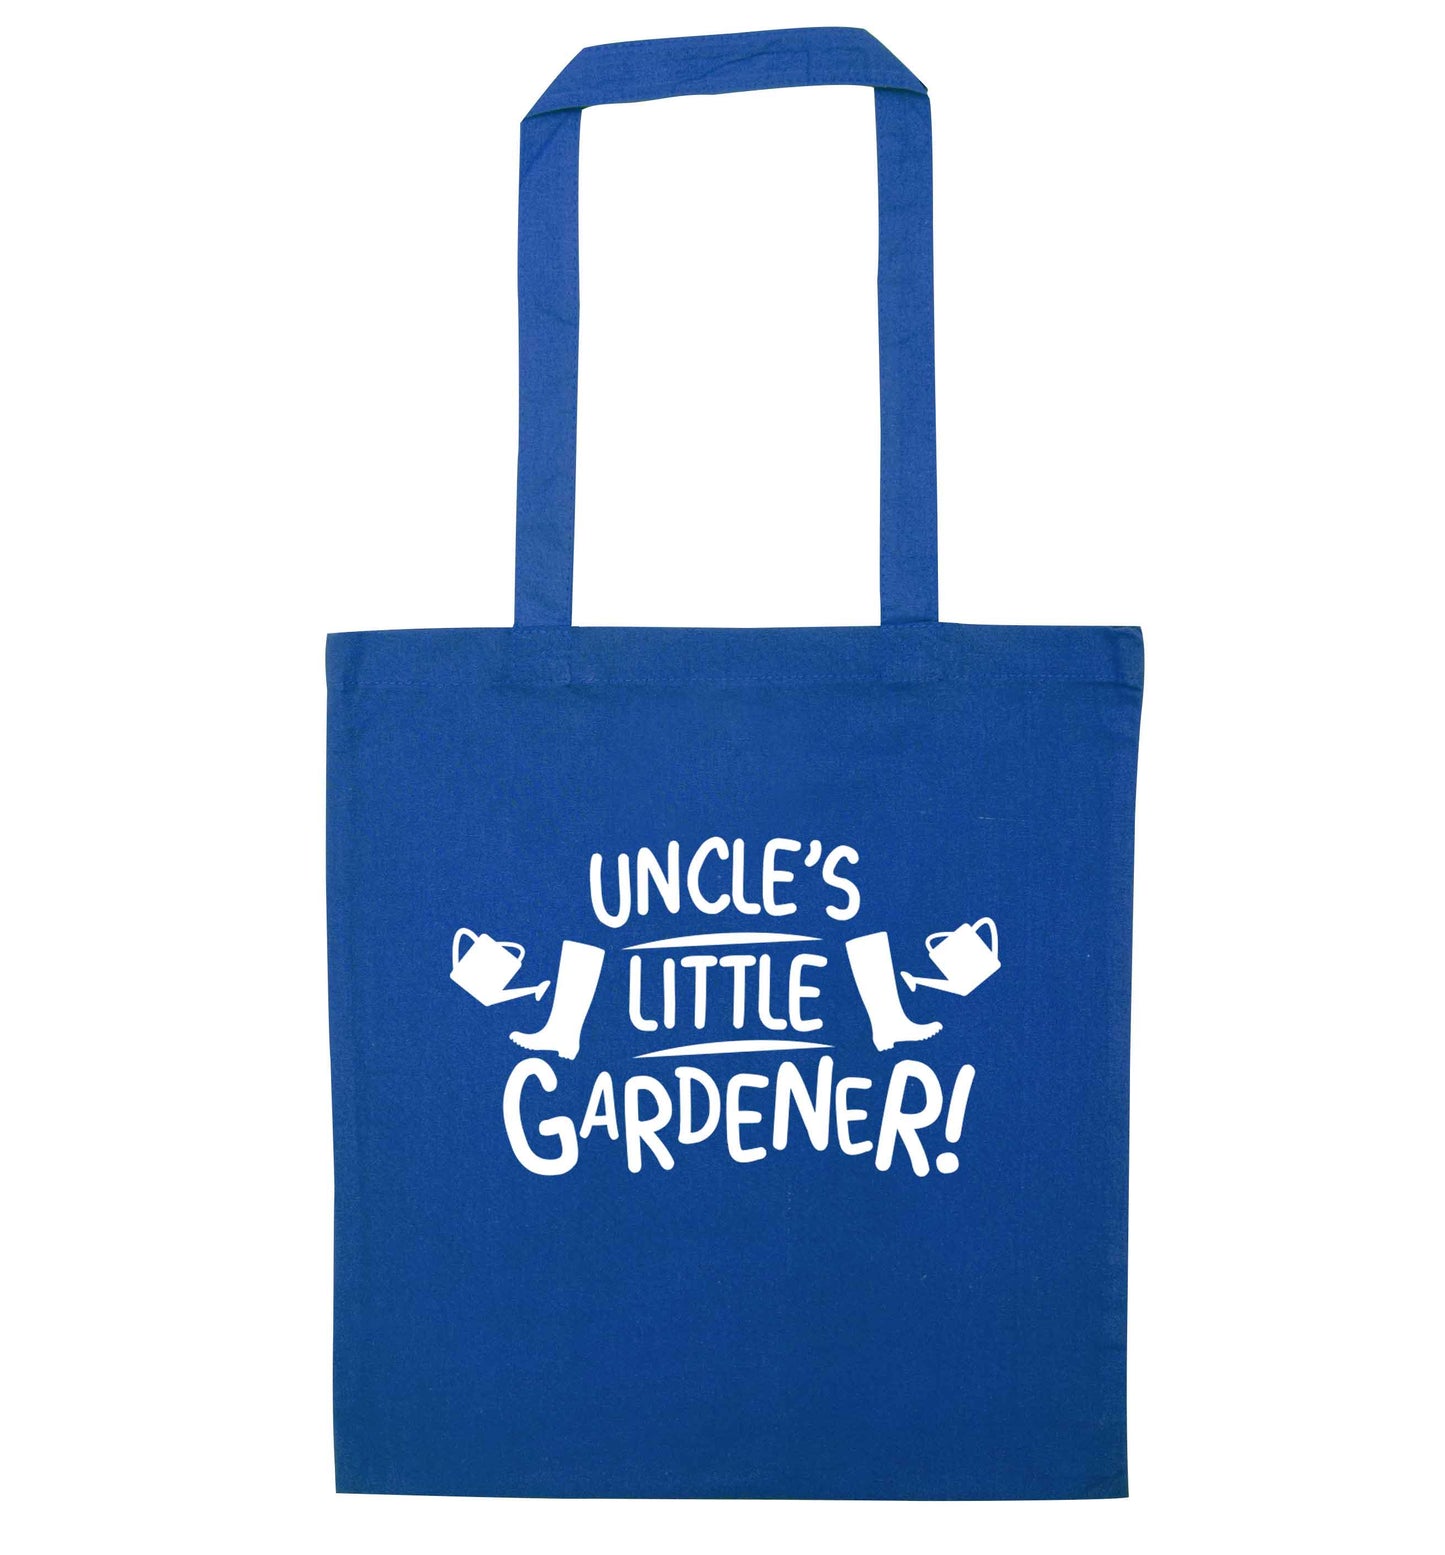 Uncle's little gardener blue tote bag